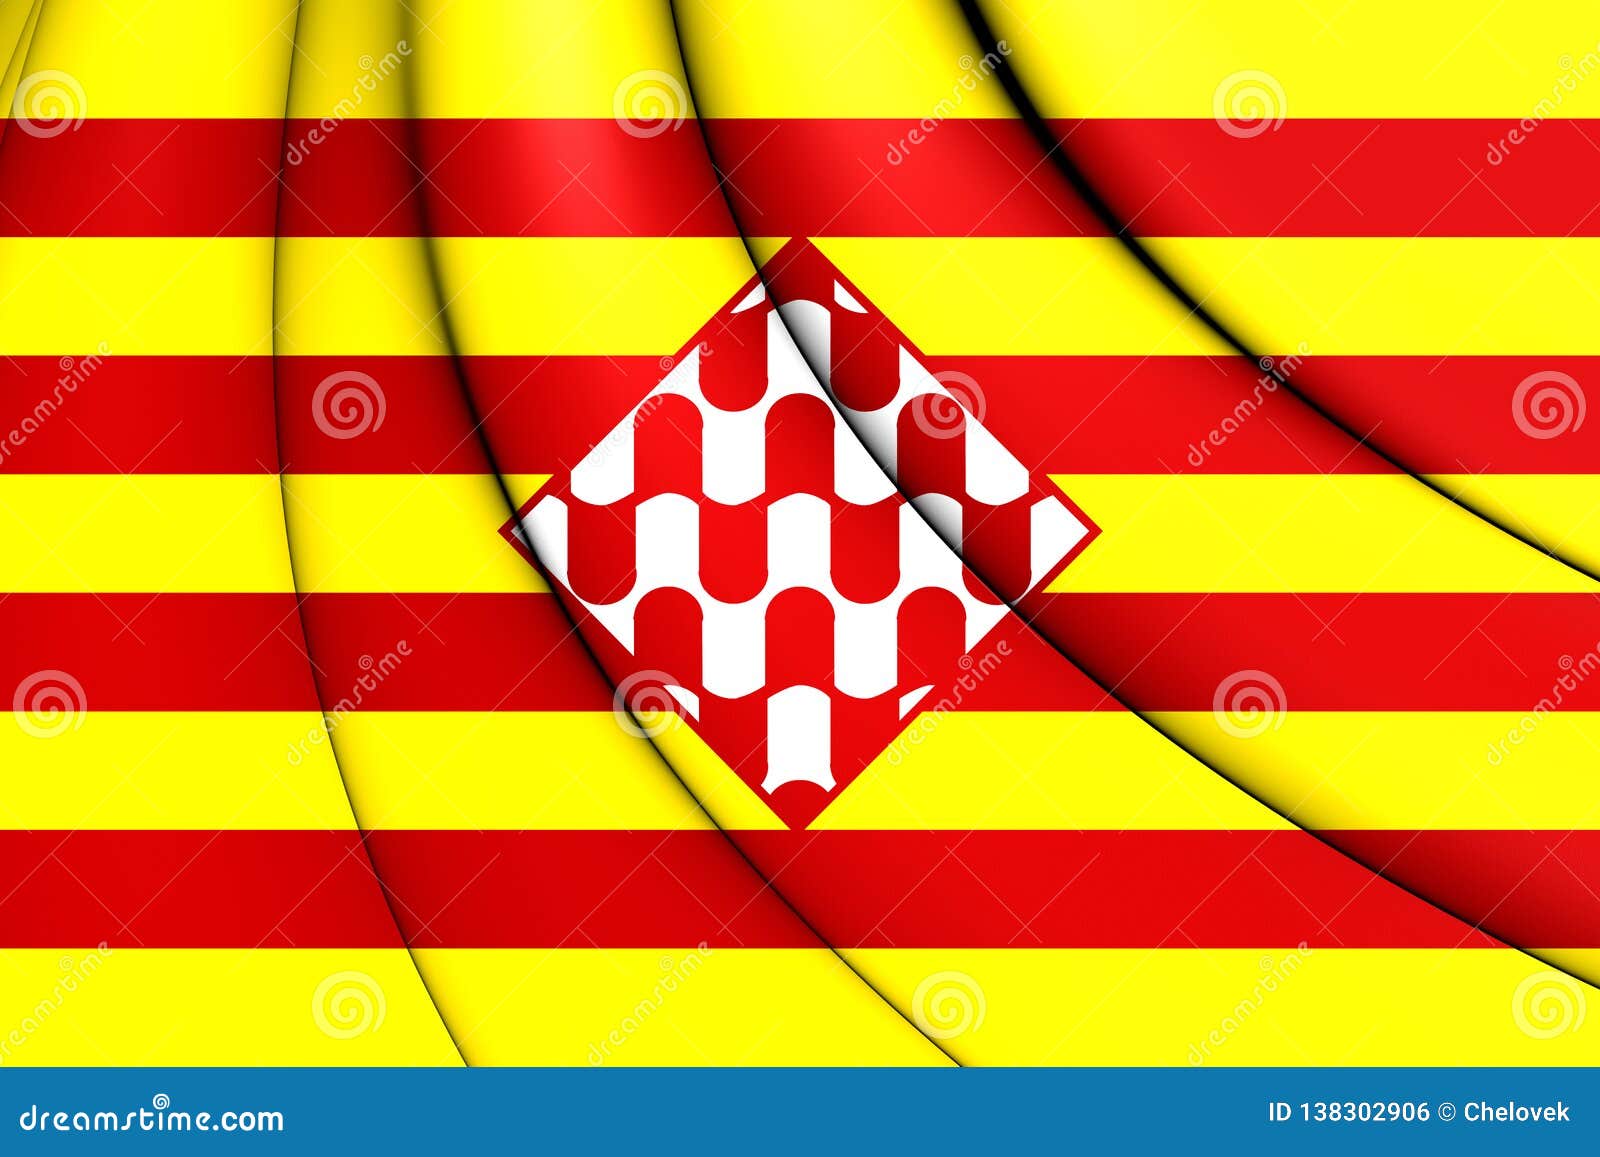 3d flag of girona province, spain.